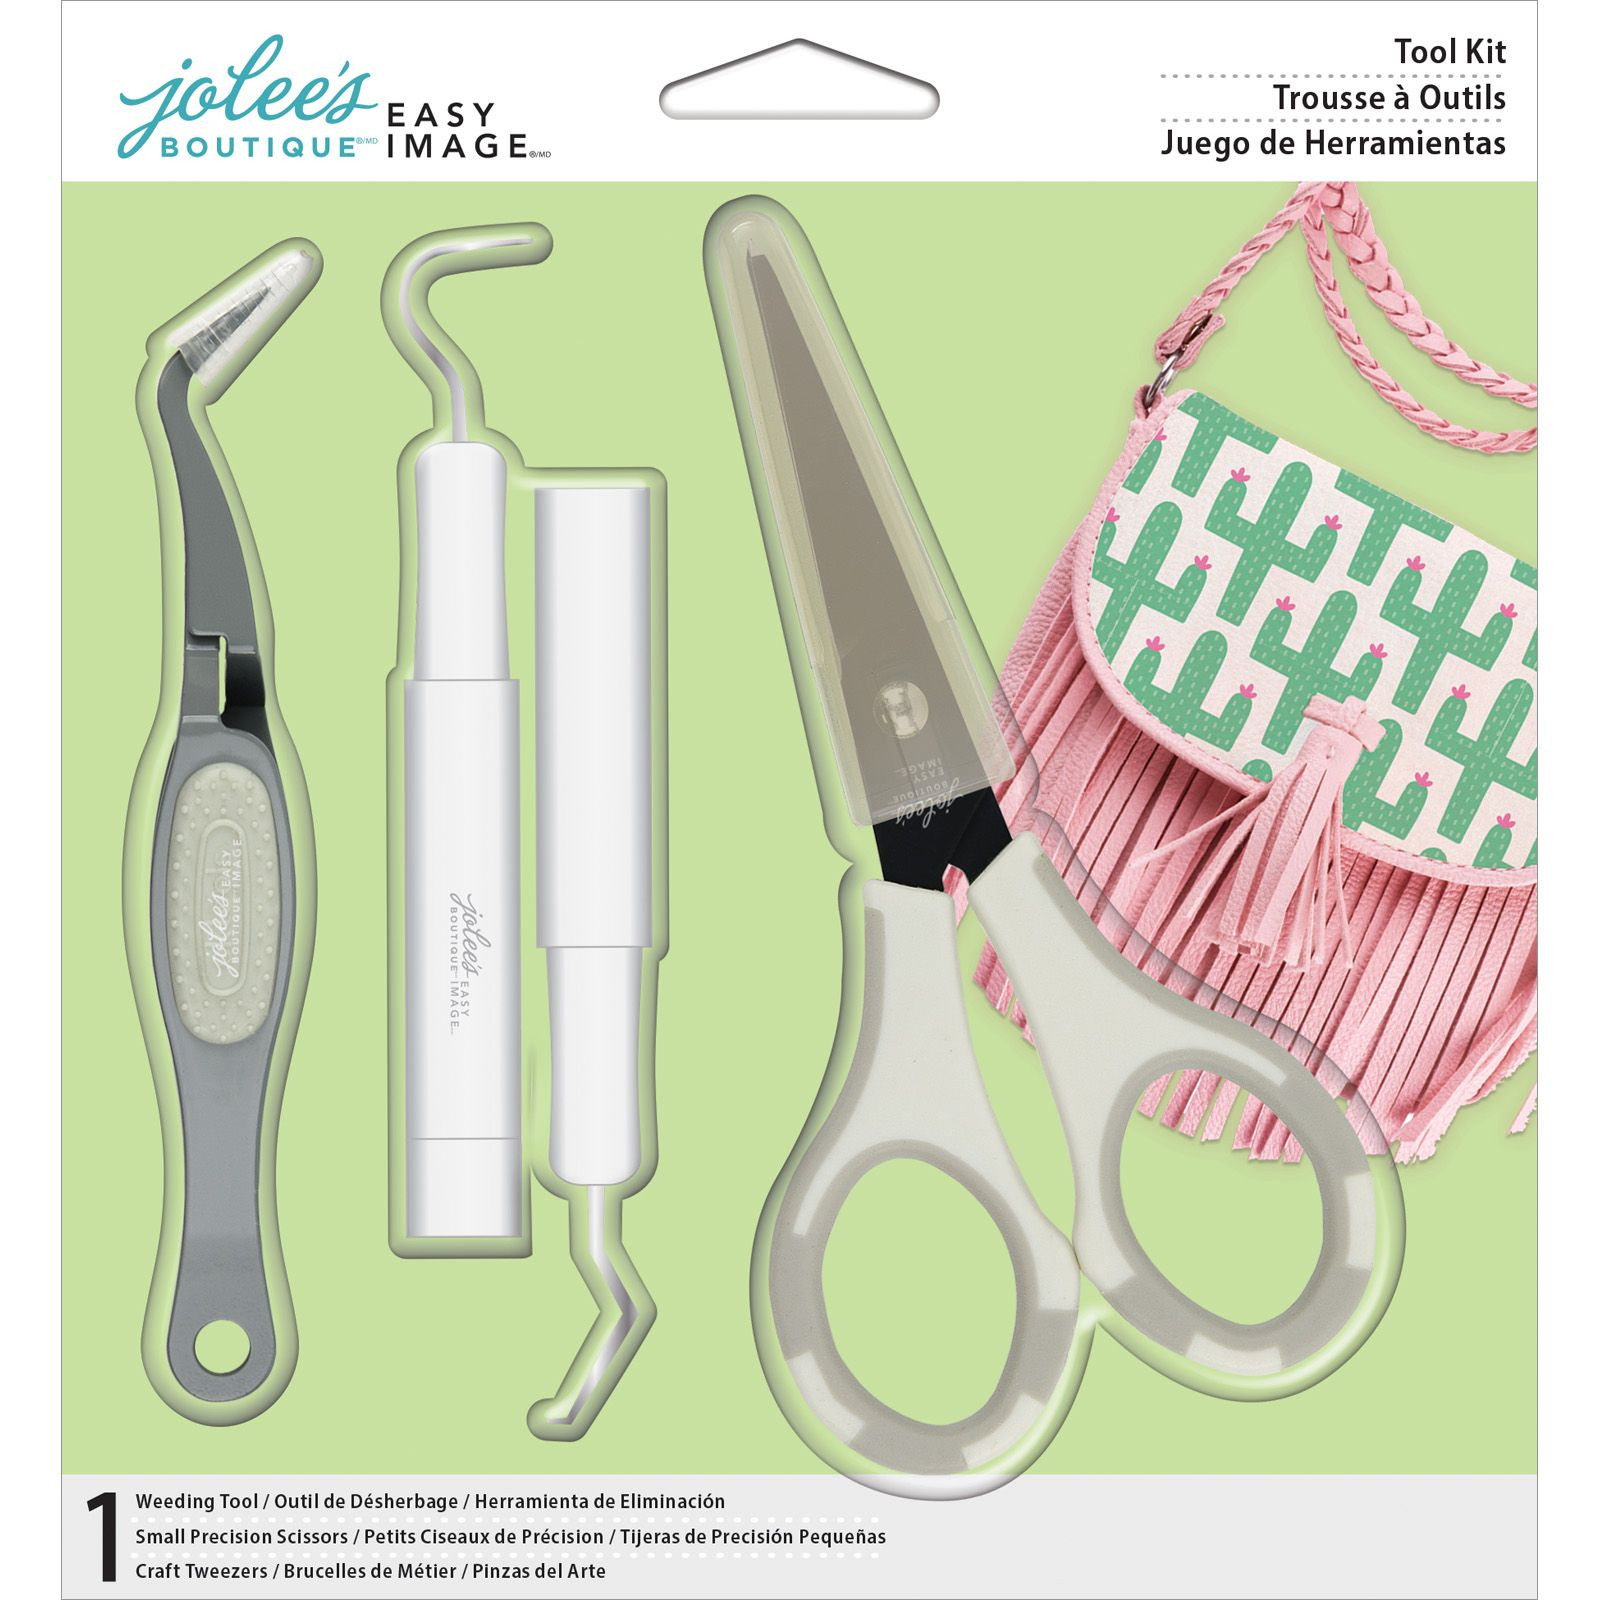 Jolee's boutique • Easy image tool kit 3pcs